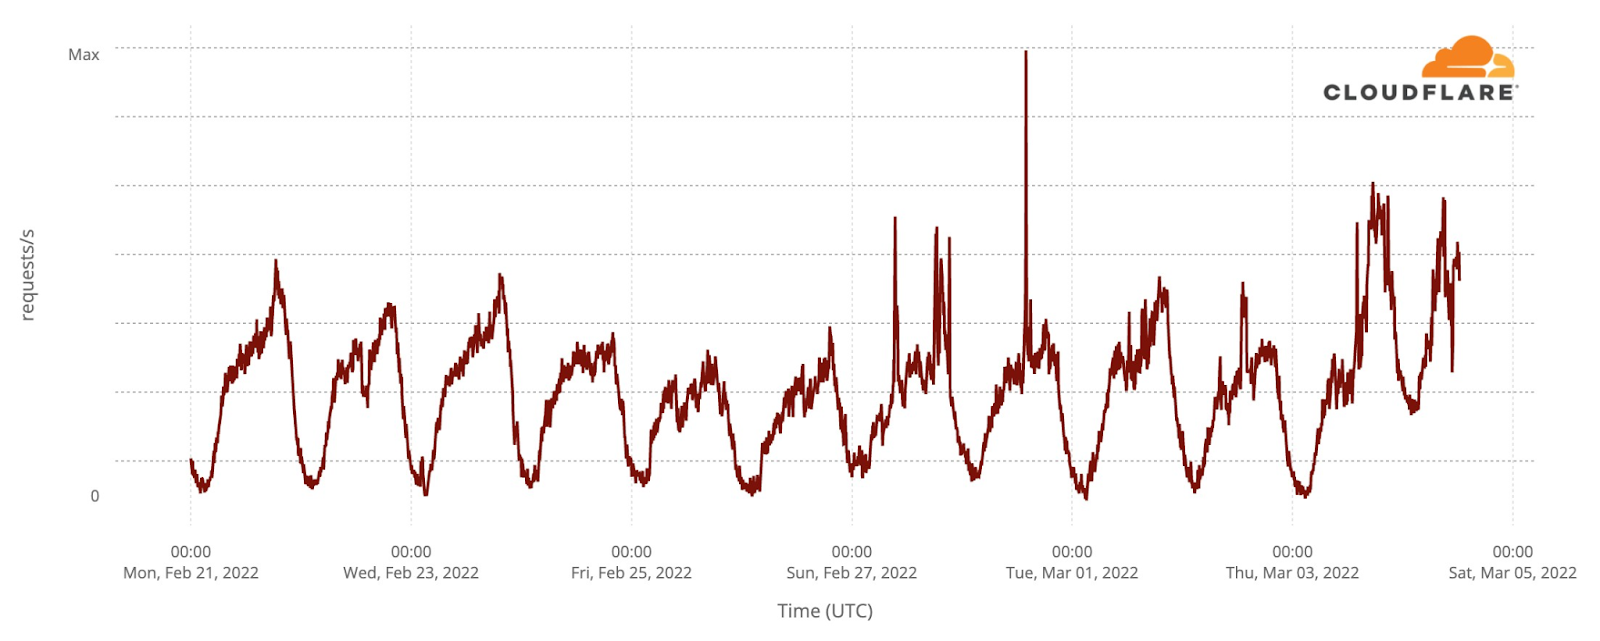 Internet traffic patterns in Ukraine since February 21, 2022